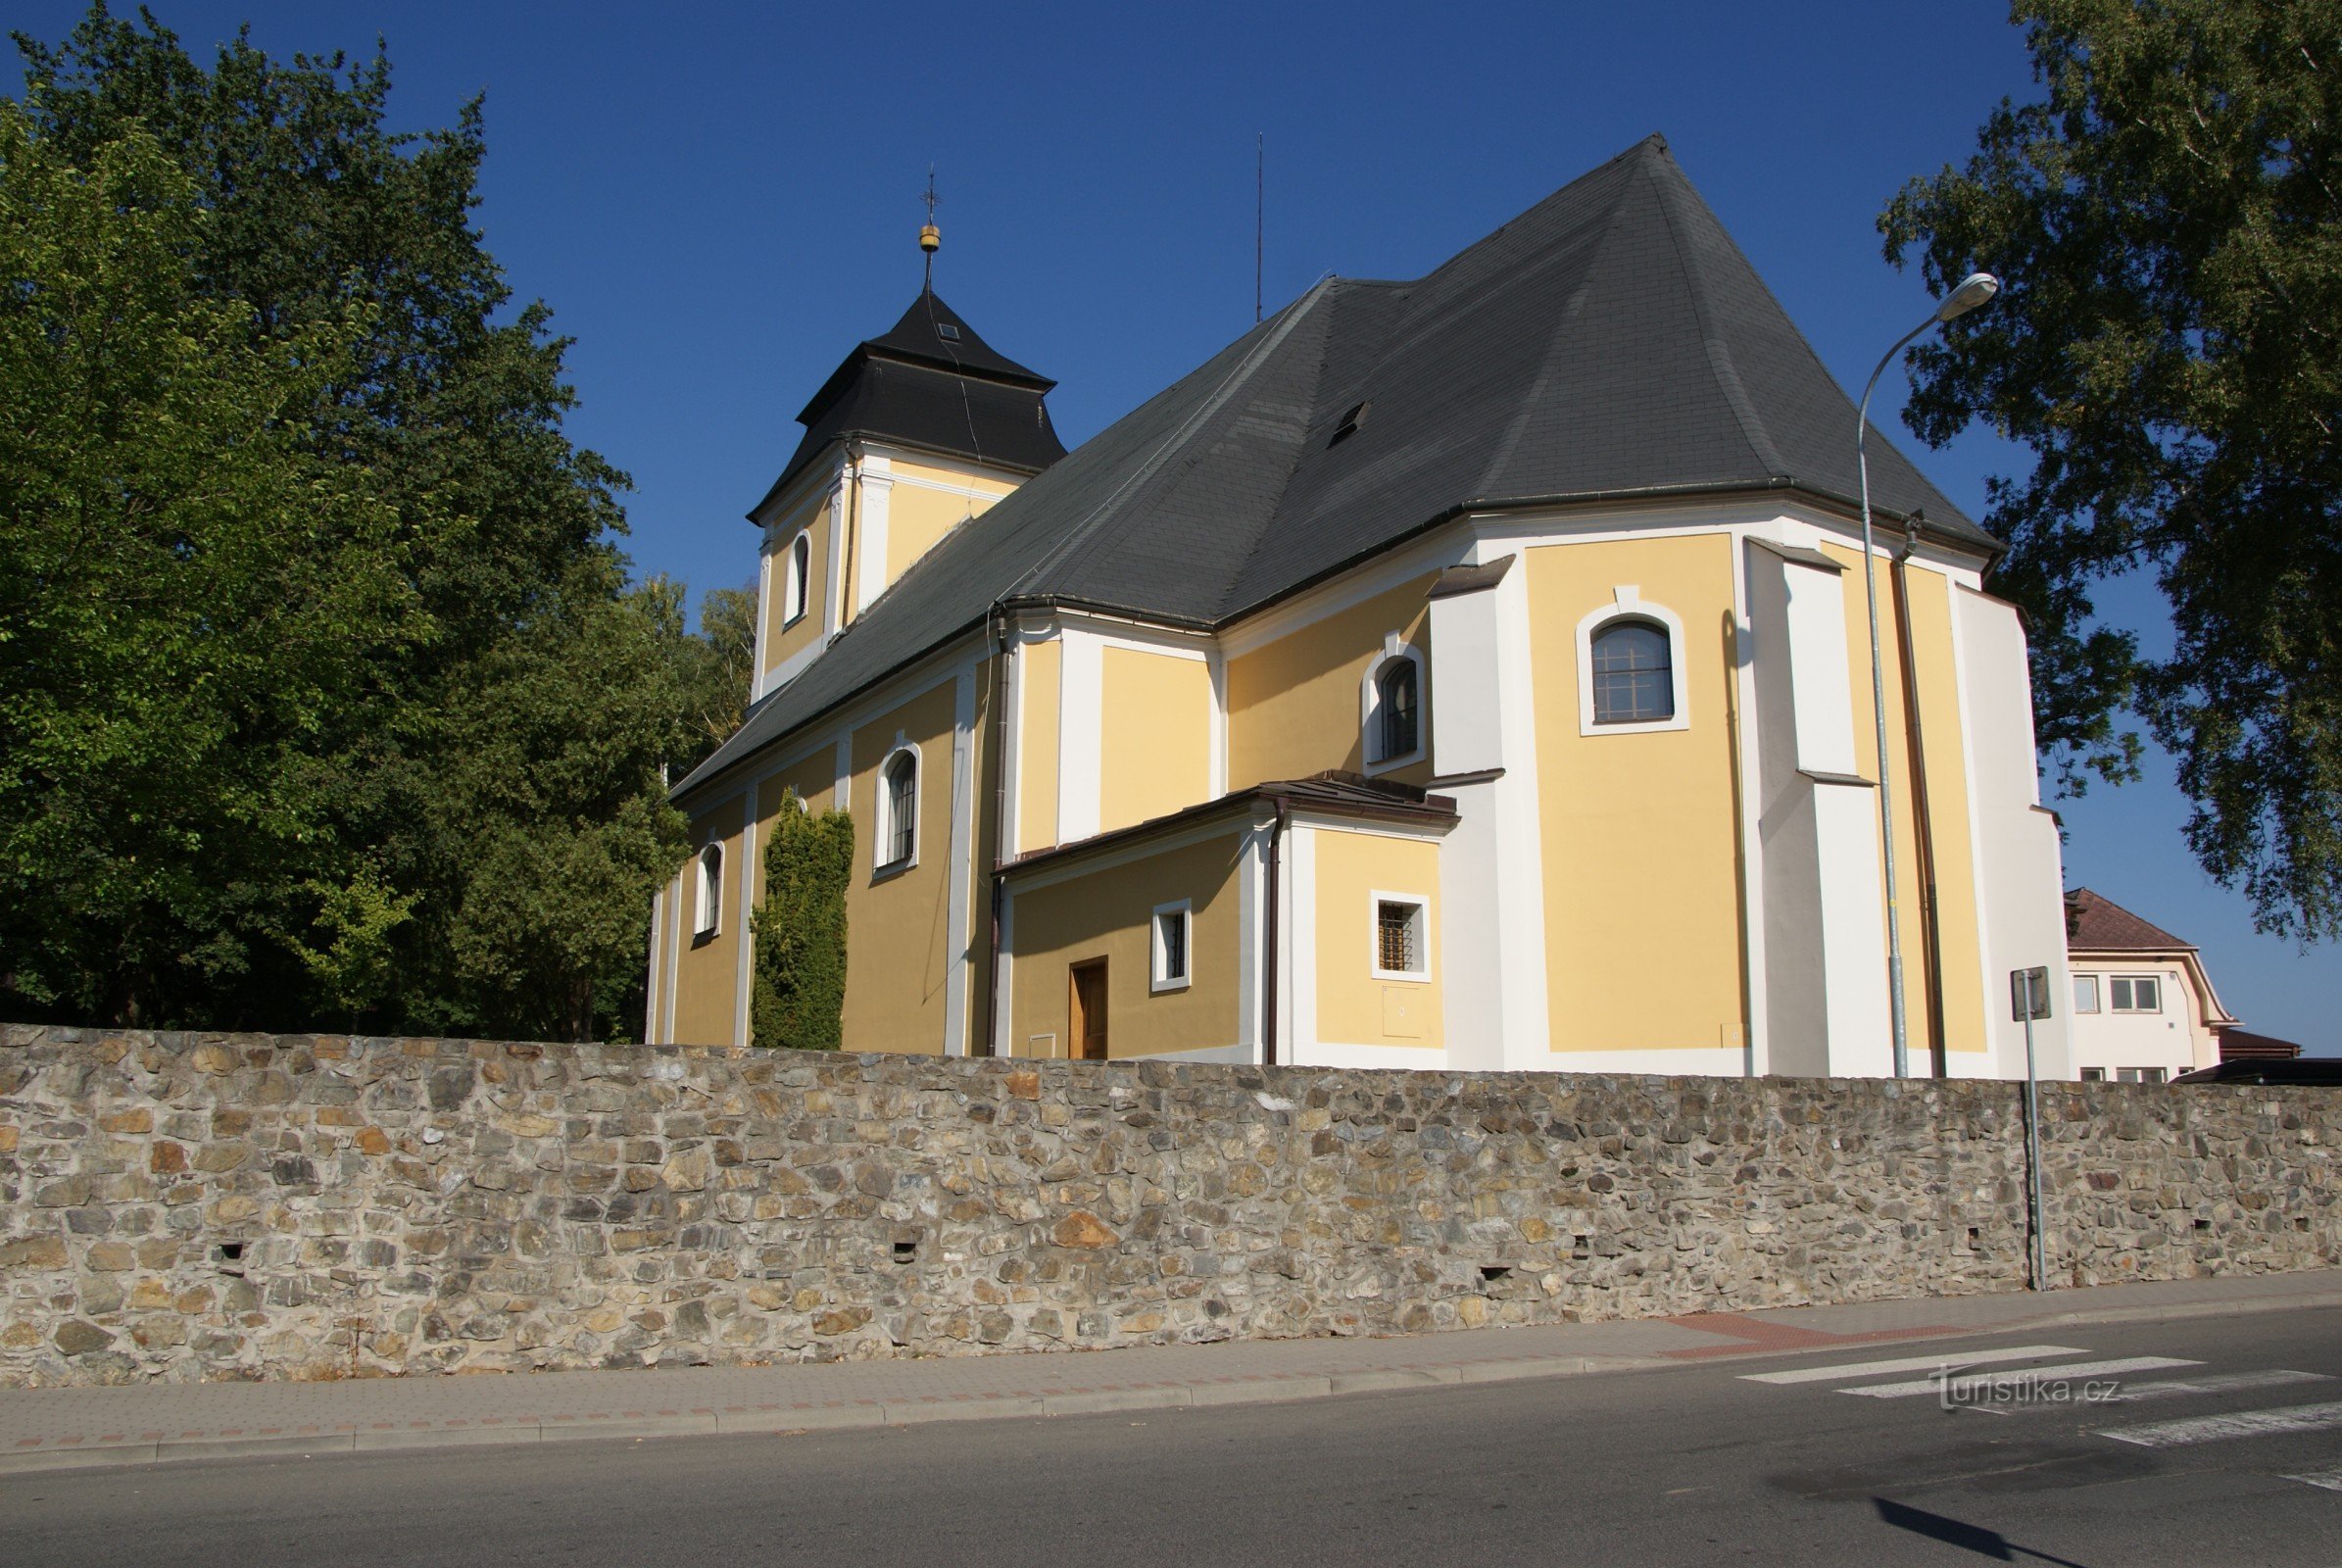 iglesia de st. Bárbara